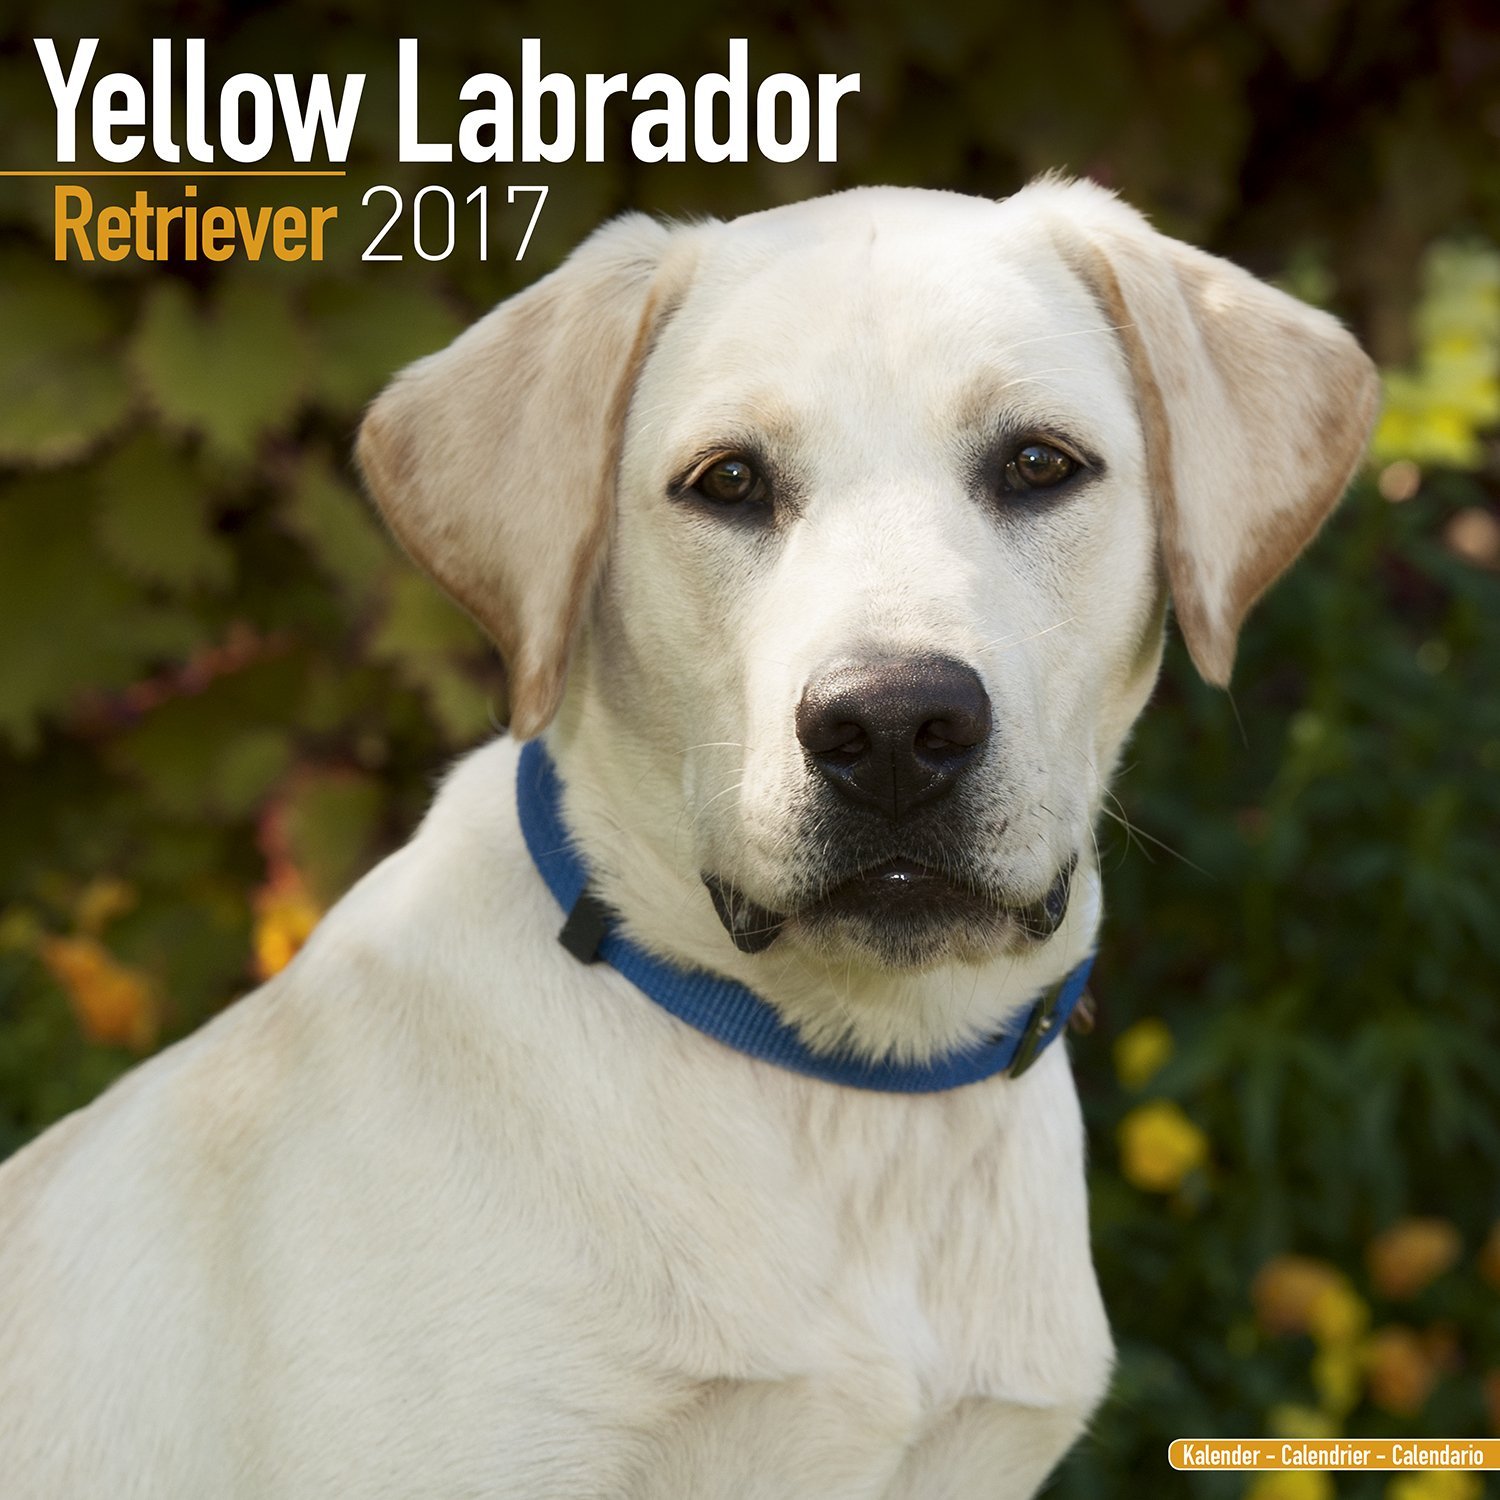 Yellow Lab Calendar 2017 - Yellow Labrador - Dog Breed Calendars ...